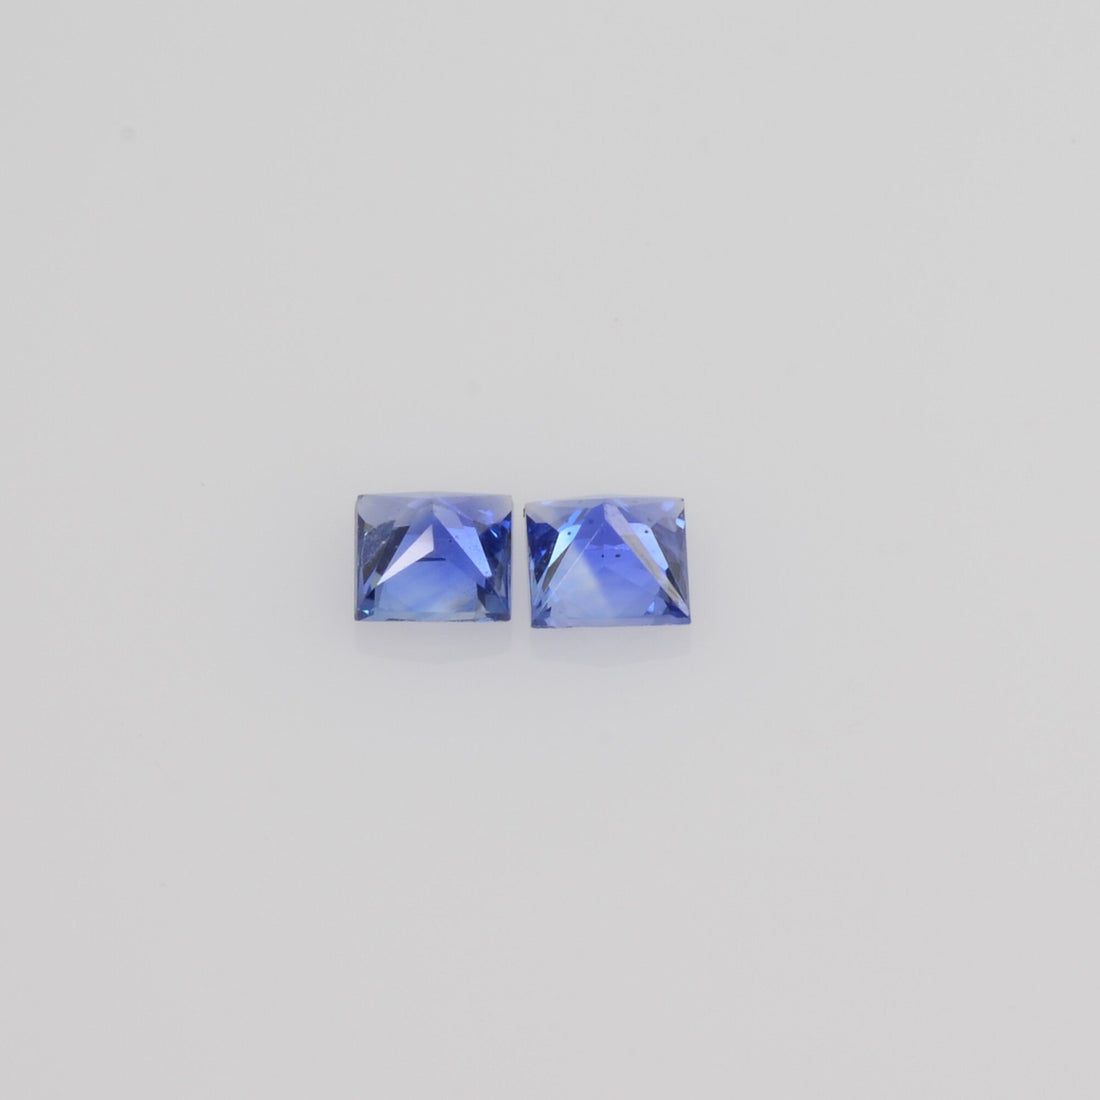 3.3-3.7 MM Natural Princess Cut Blue Sapphire Loose Gemstone